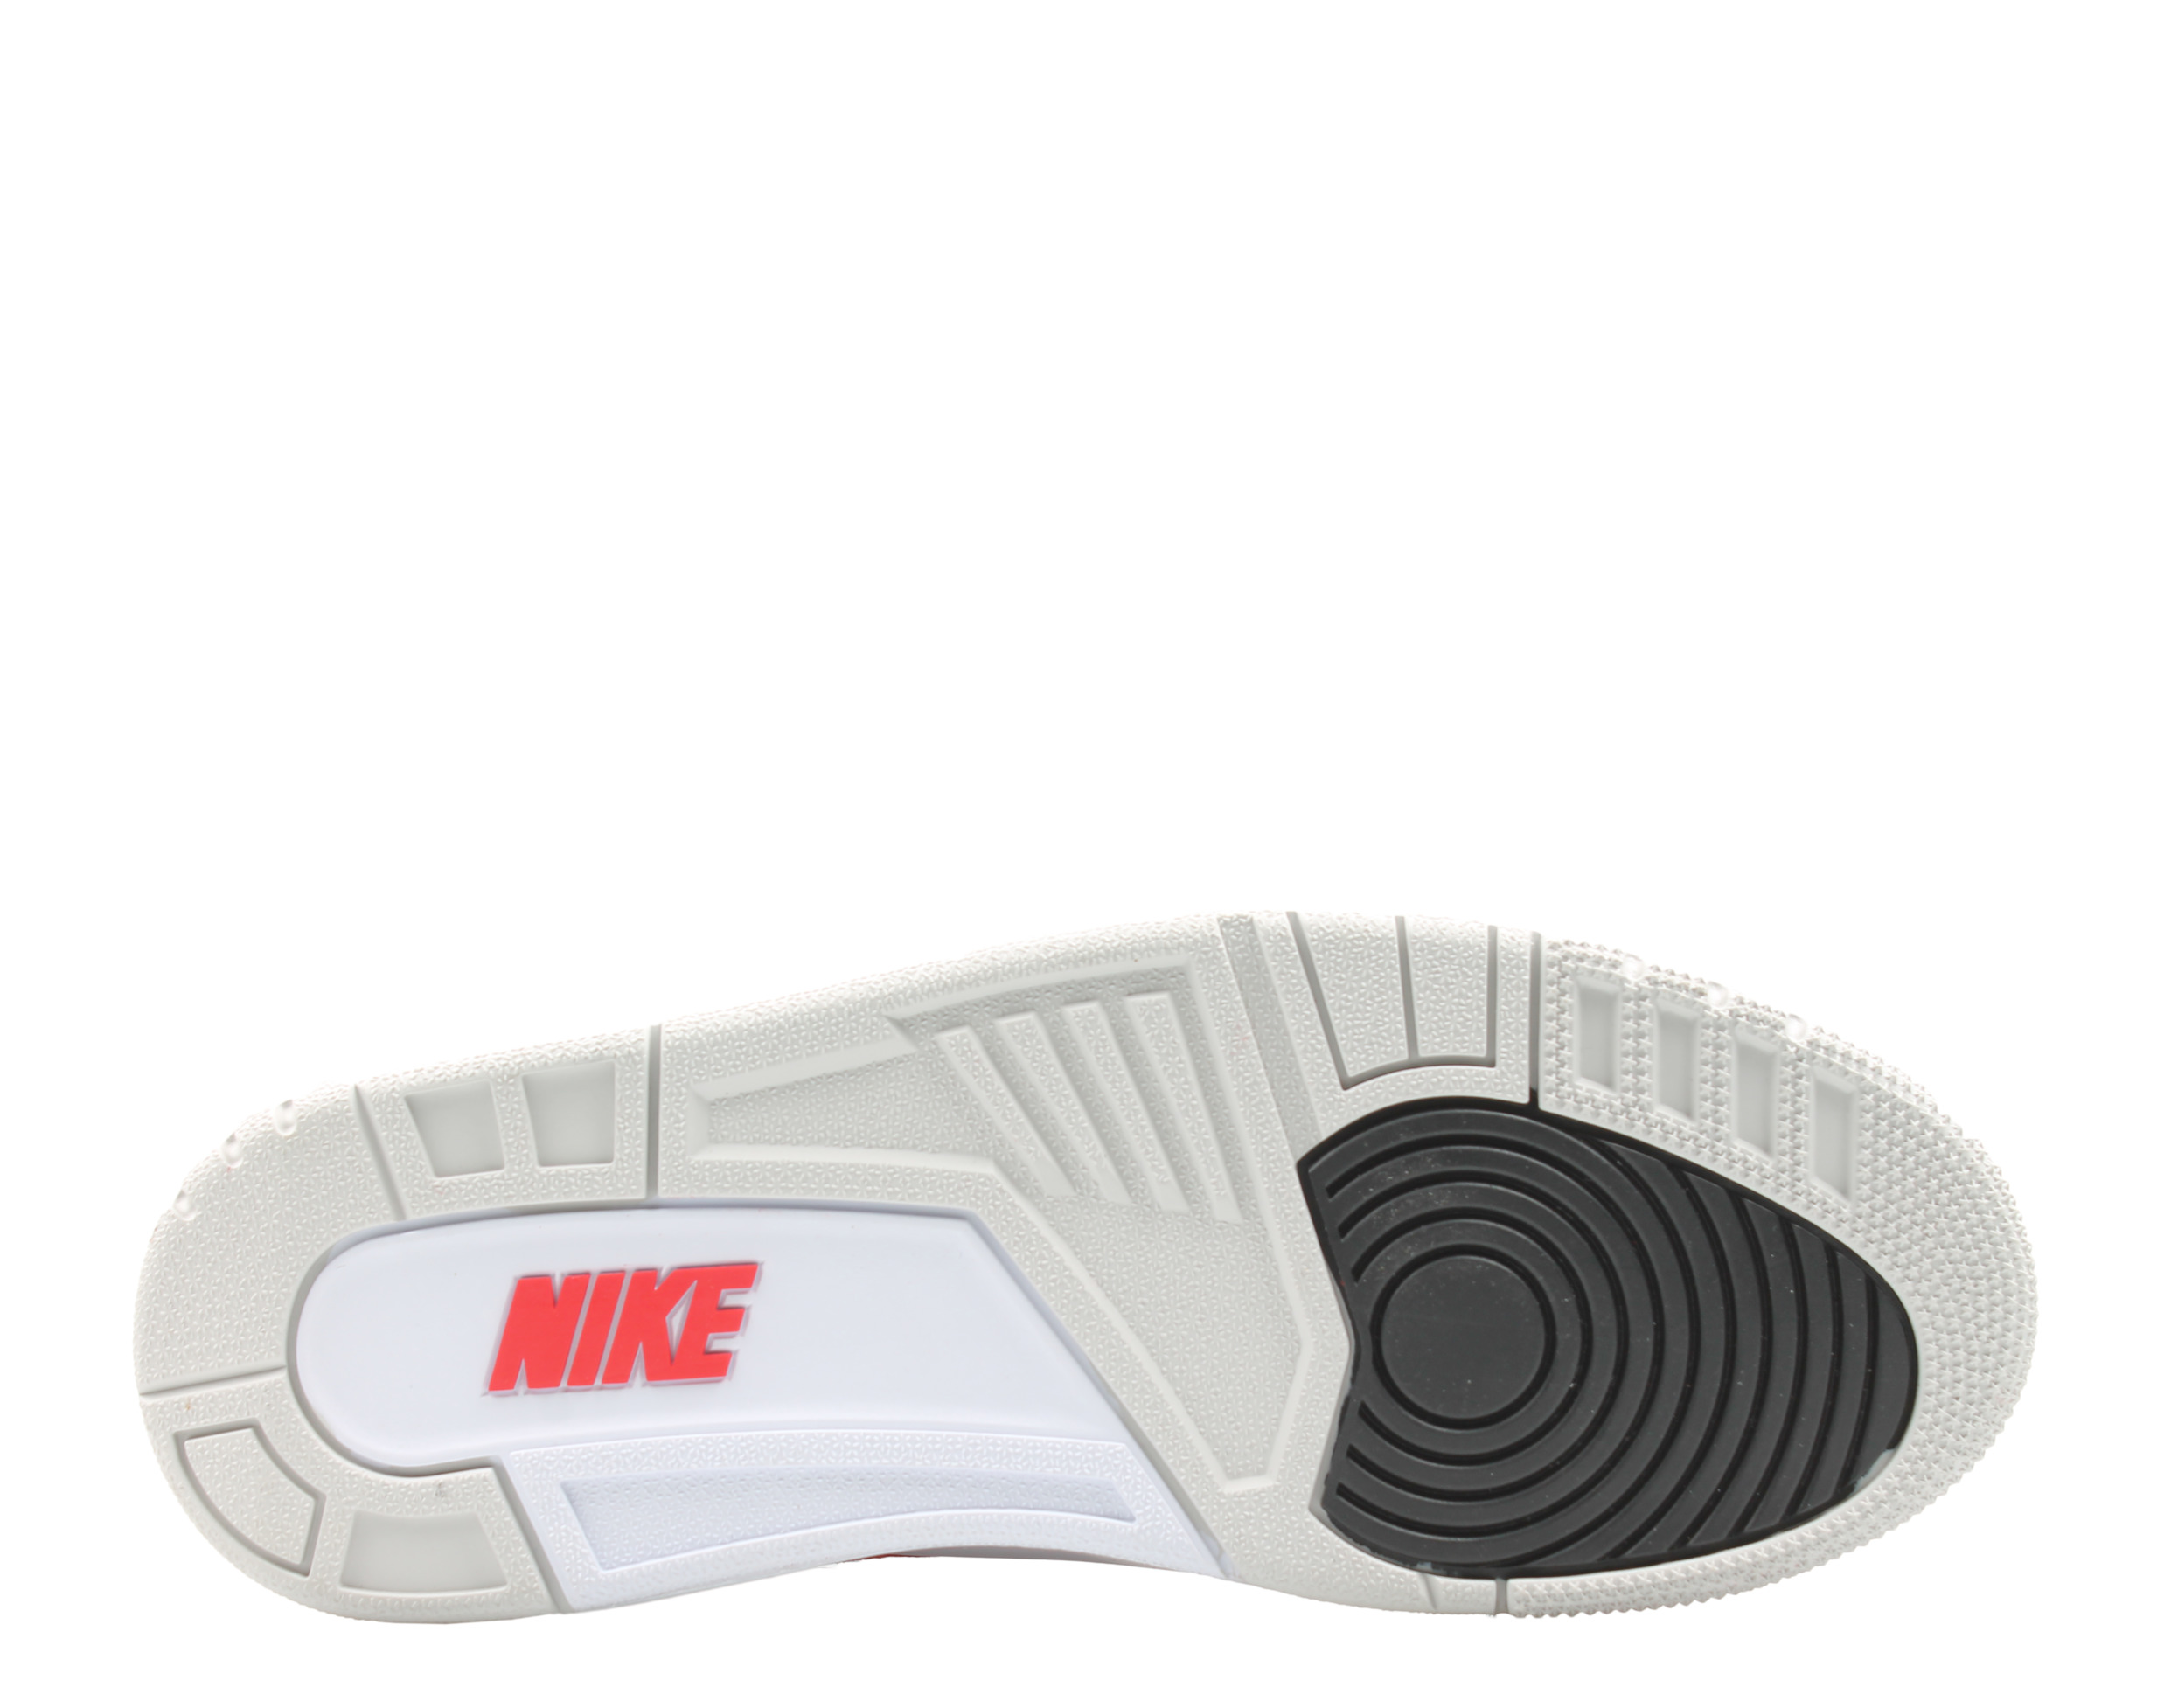 Nike Air Jordan 3 Retro TH SP Men's Basketball Shoes Size 9.5 - image 5 of 6